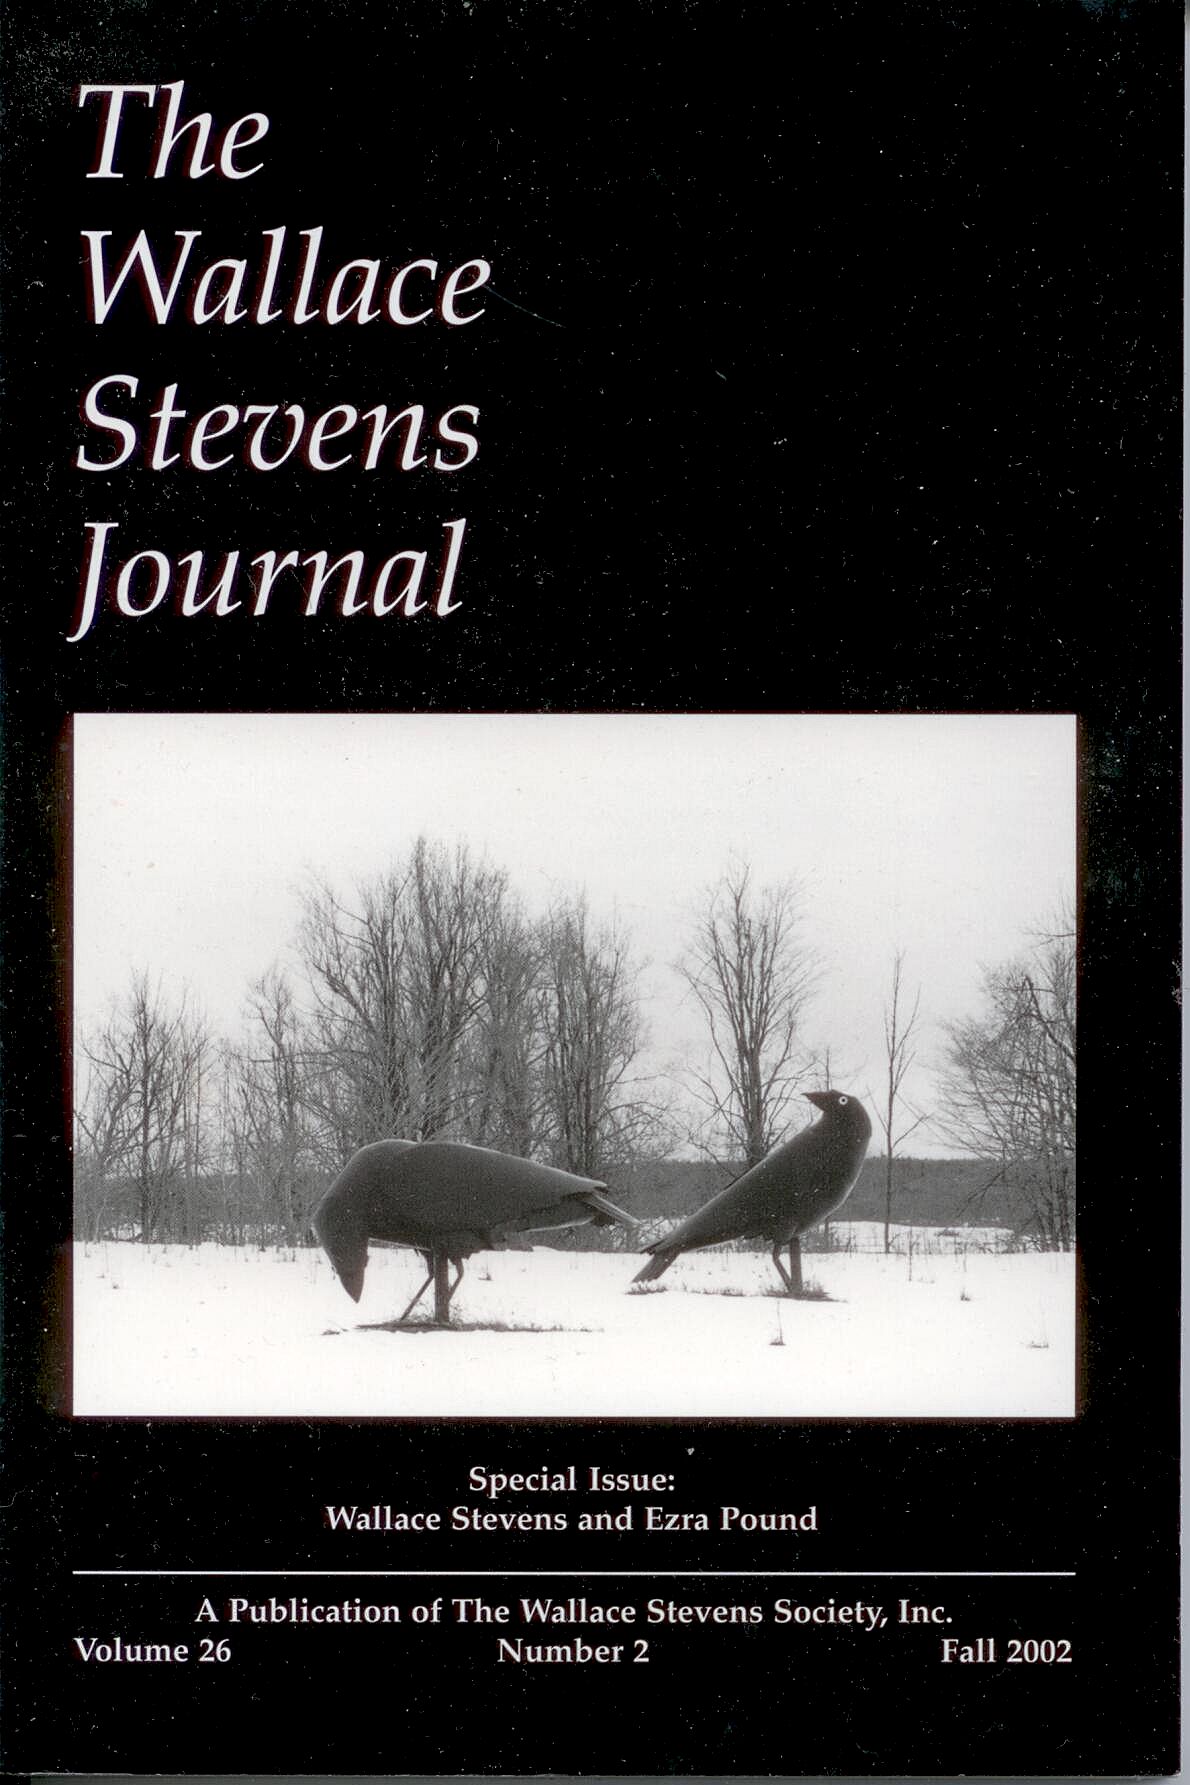 The Wallace Stevens Journal